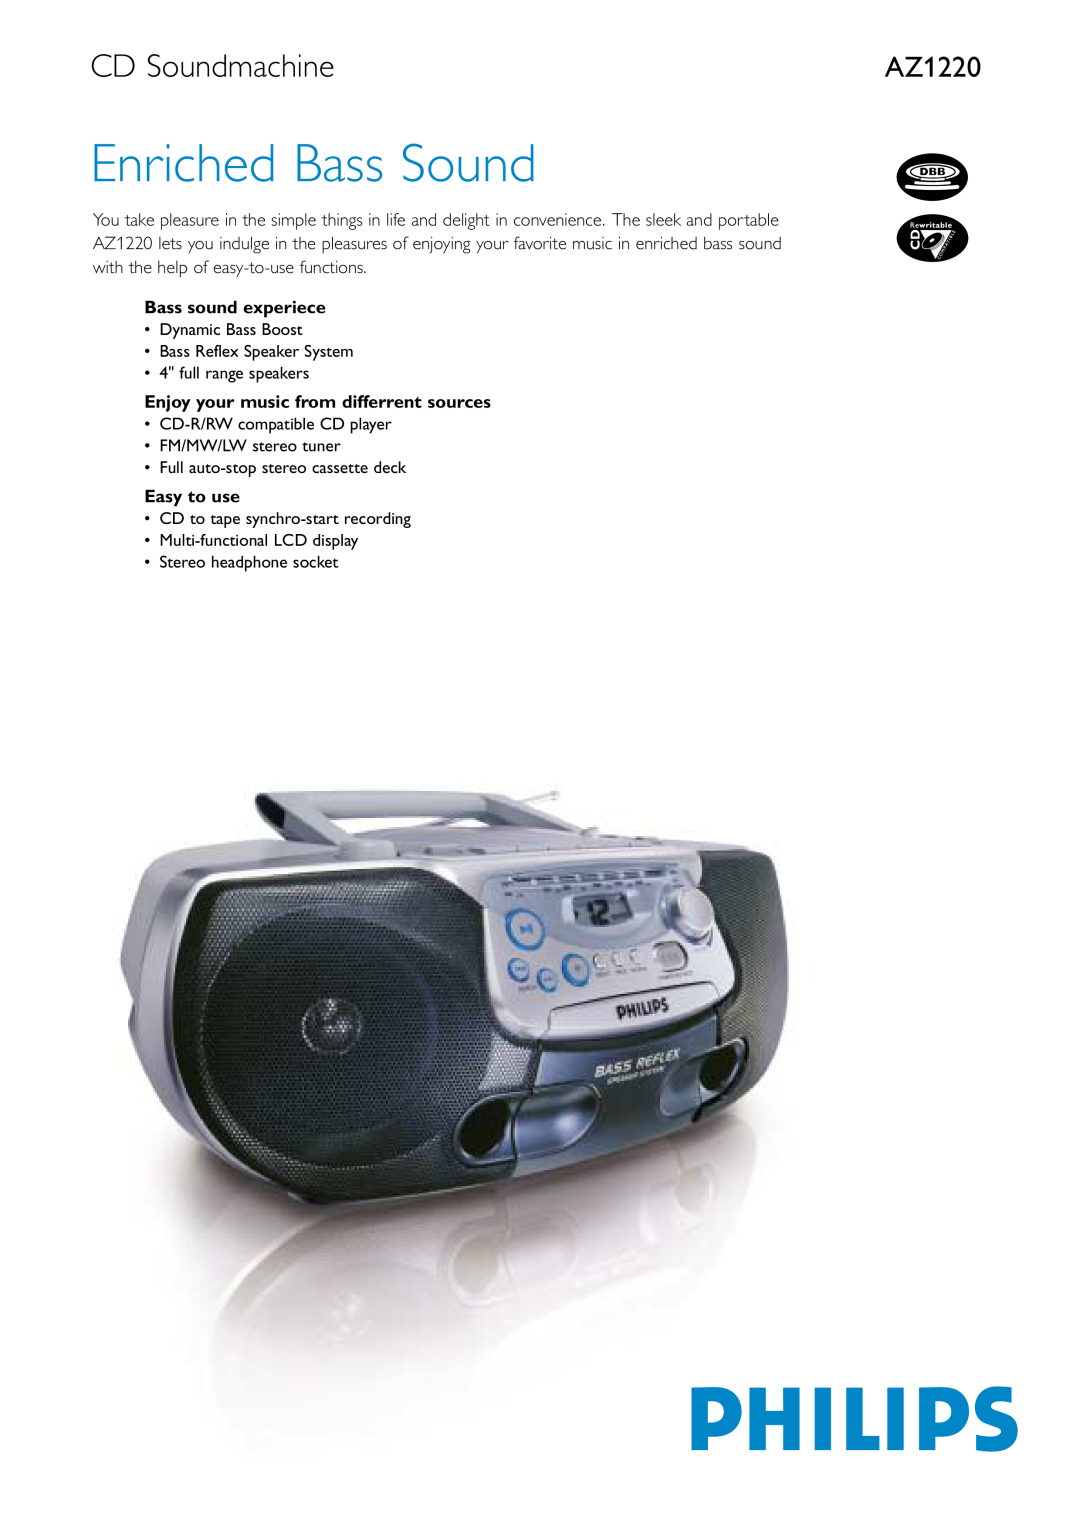 Philips AZ1220 manual CD Soundmachine, Enriched Bass Sound 